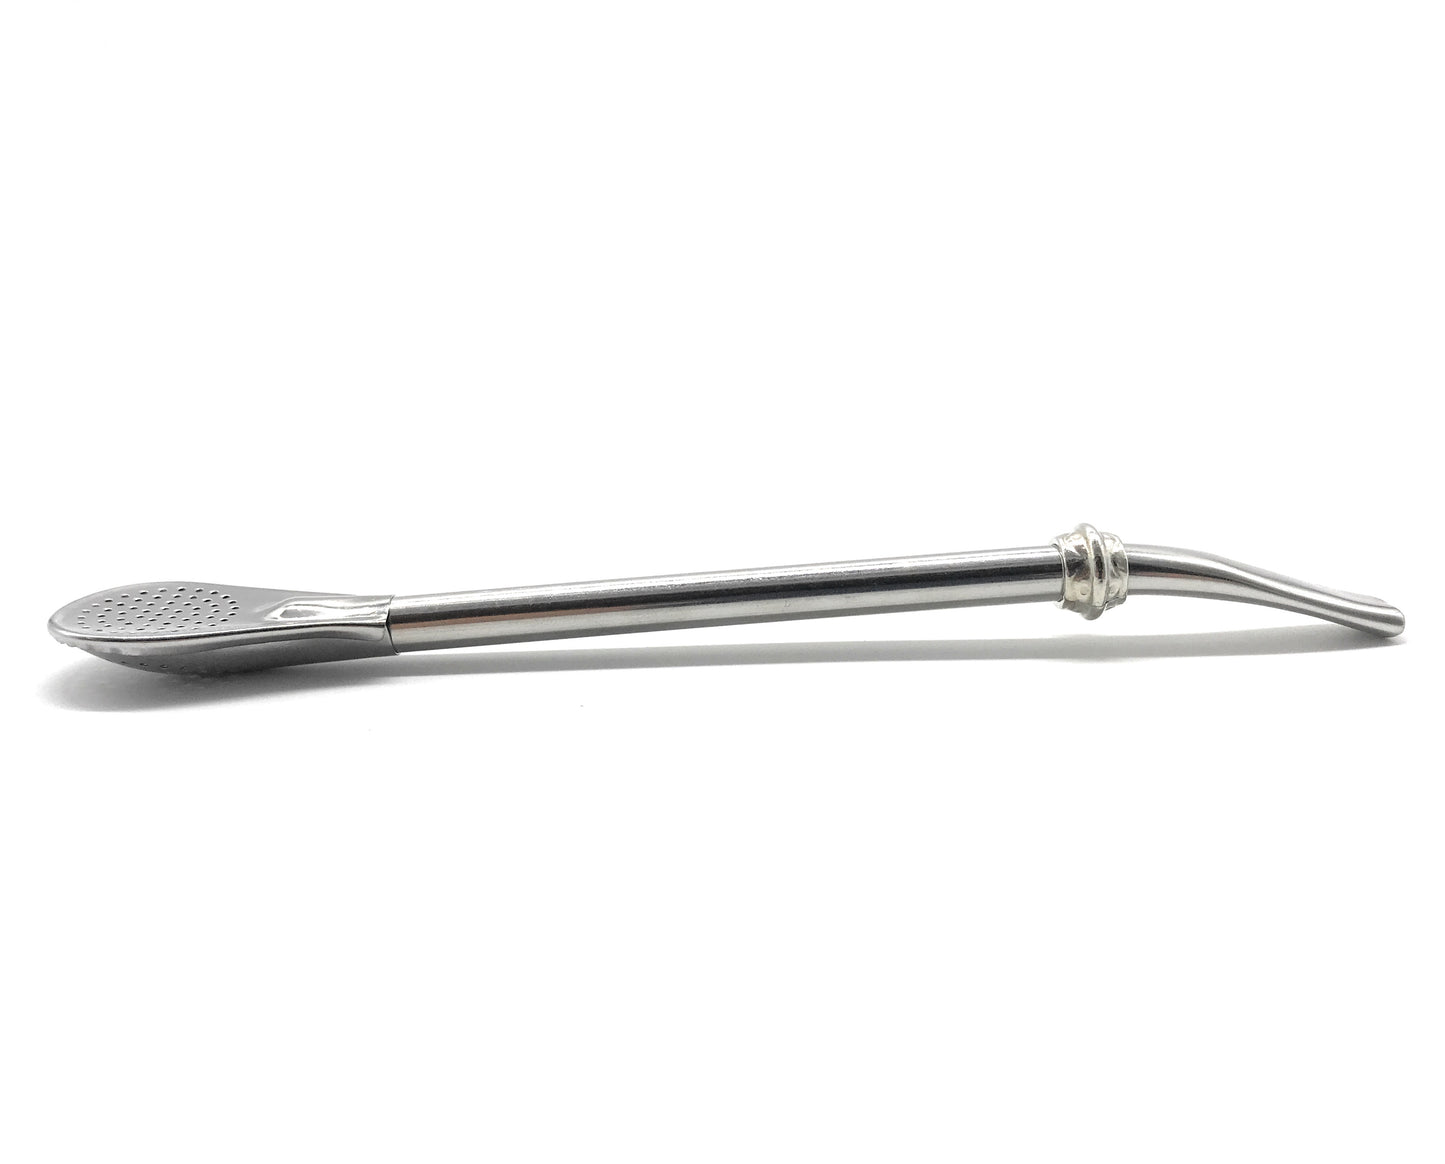 Stainless Steel bombilla Spoon style 7.5 in long